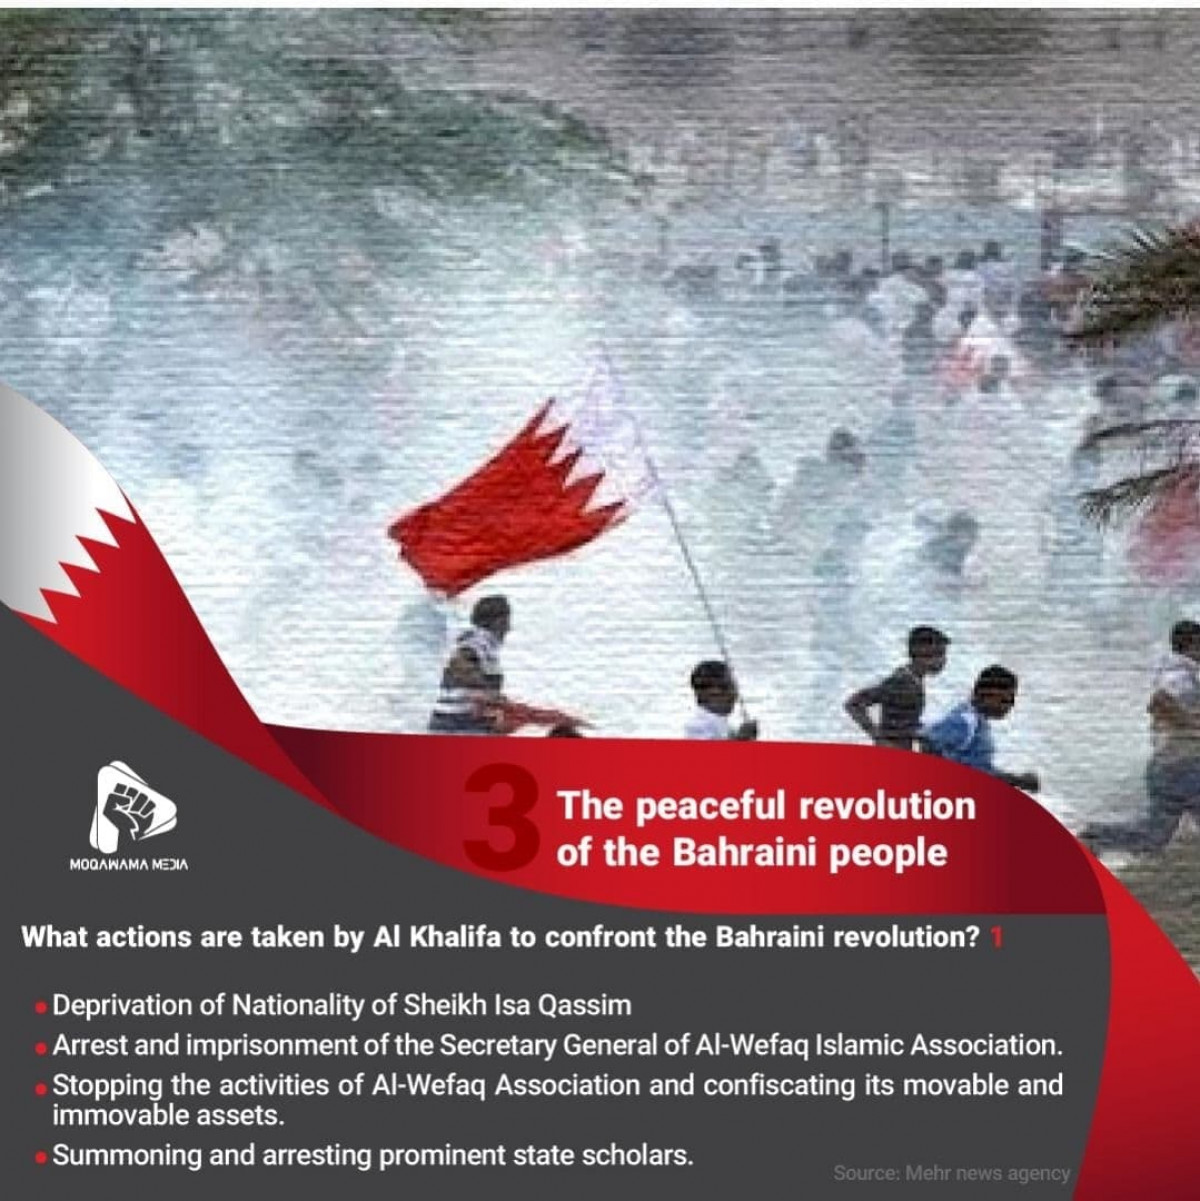 The peaceful revolution of the Bahraini people